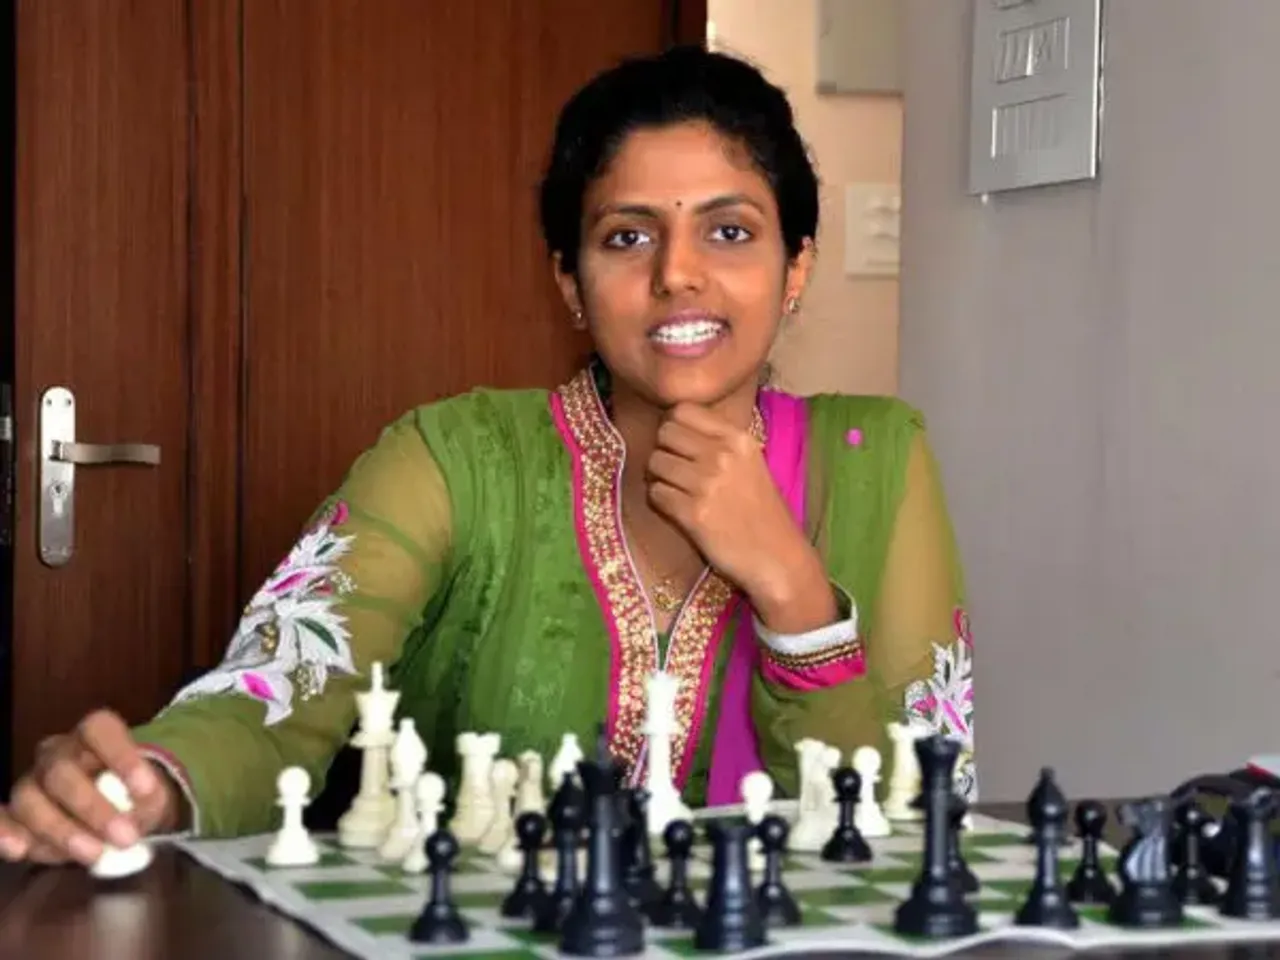 Harika Dronavalli Bags Bronze Medal Again In World Chess Championship